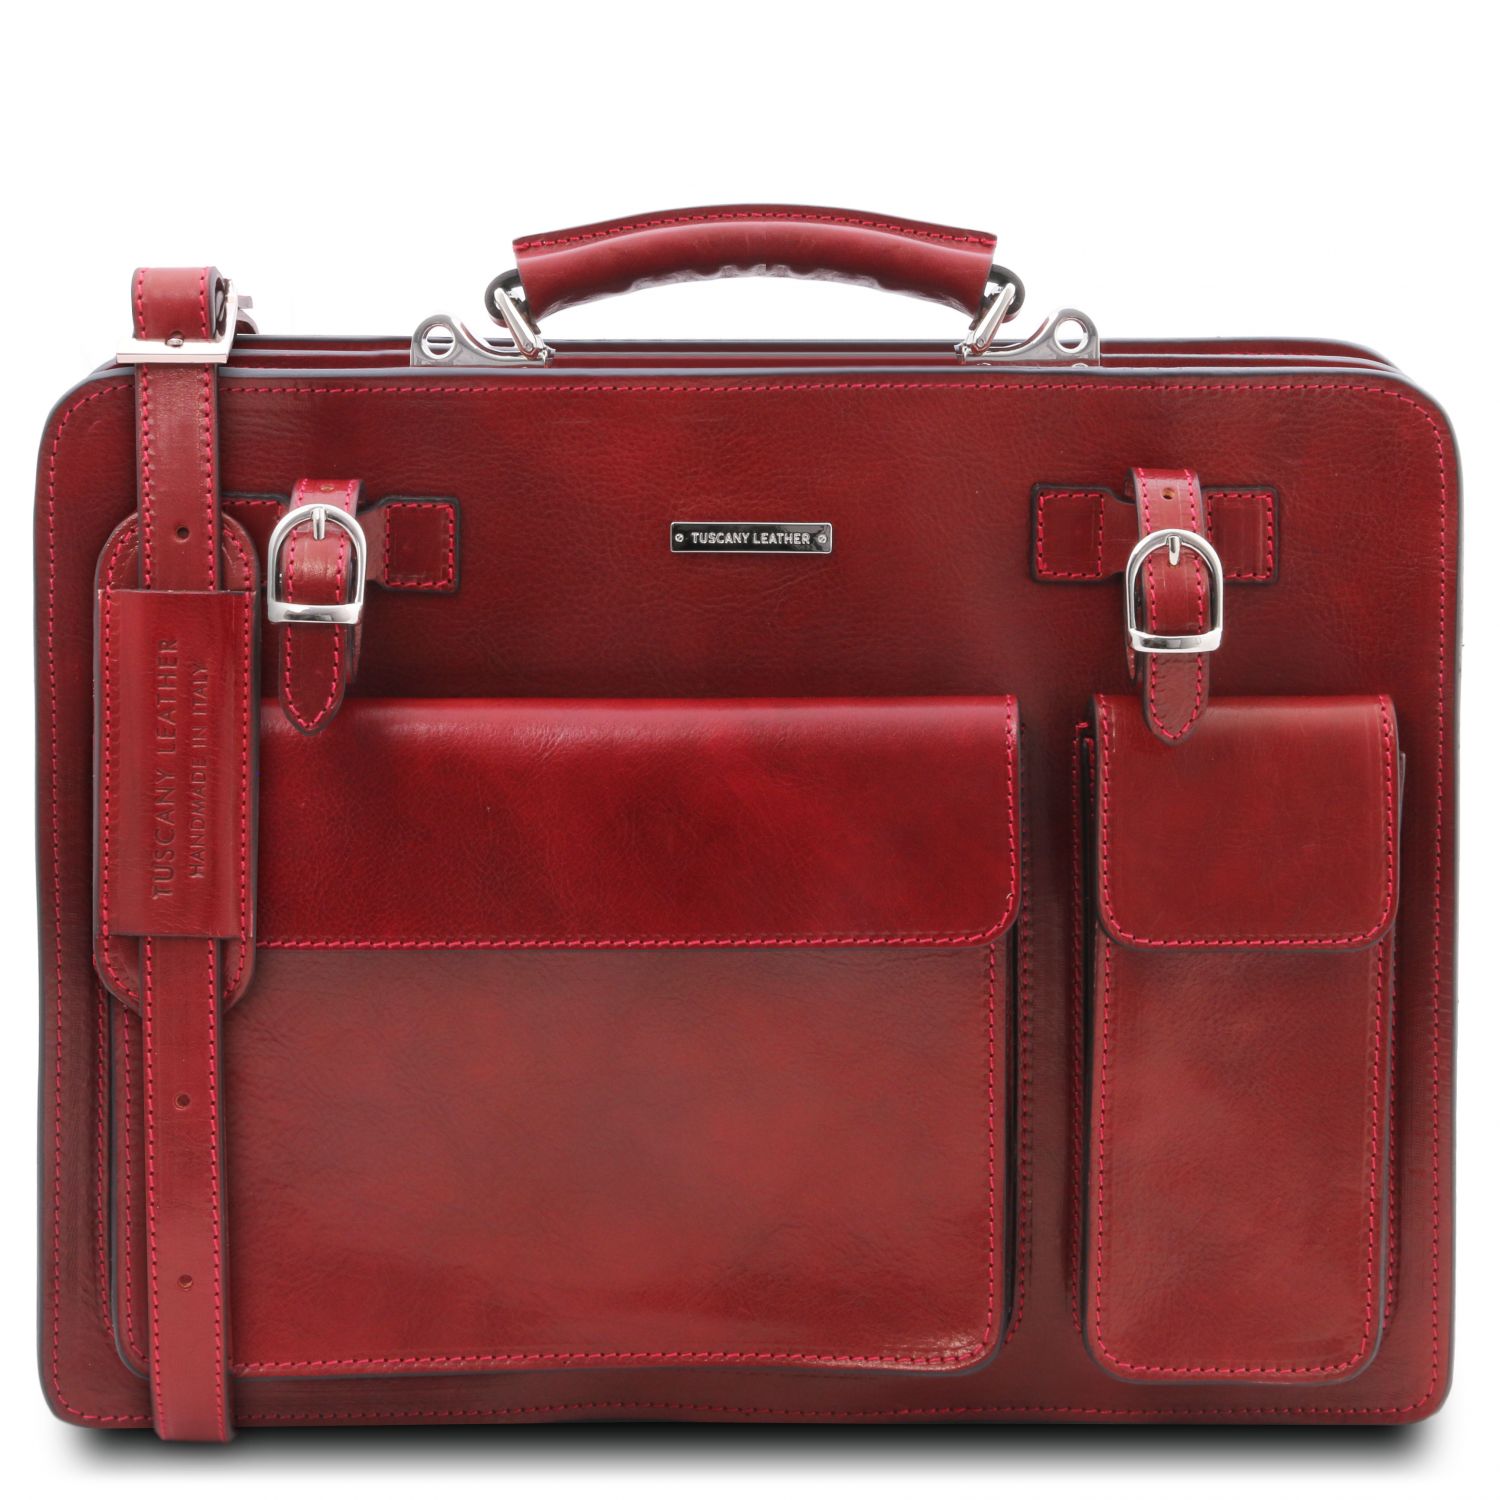 Venezia Leather briefcase 2 compartments - Red